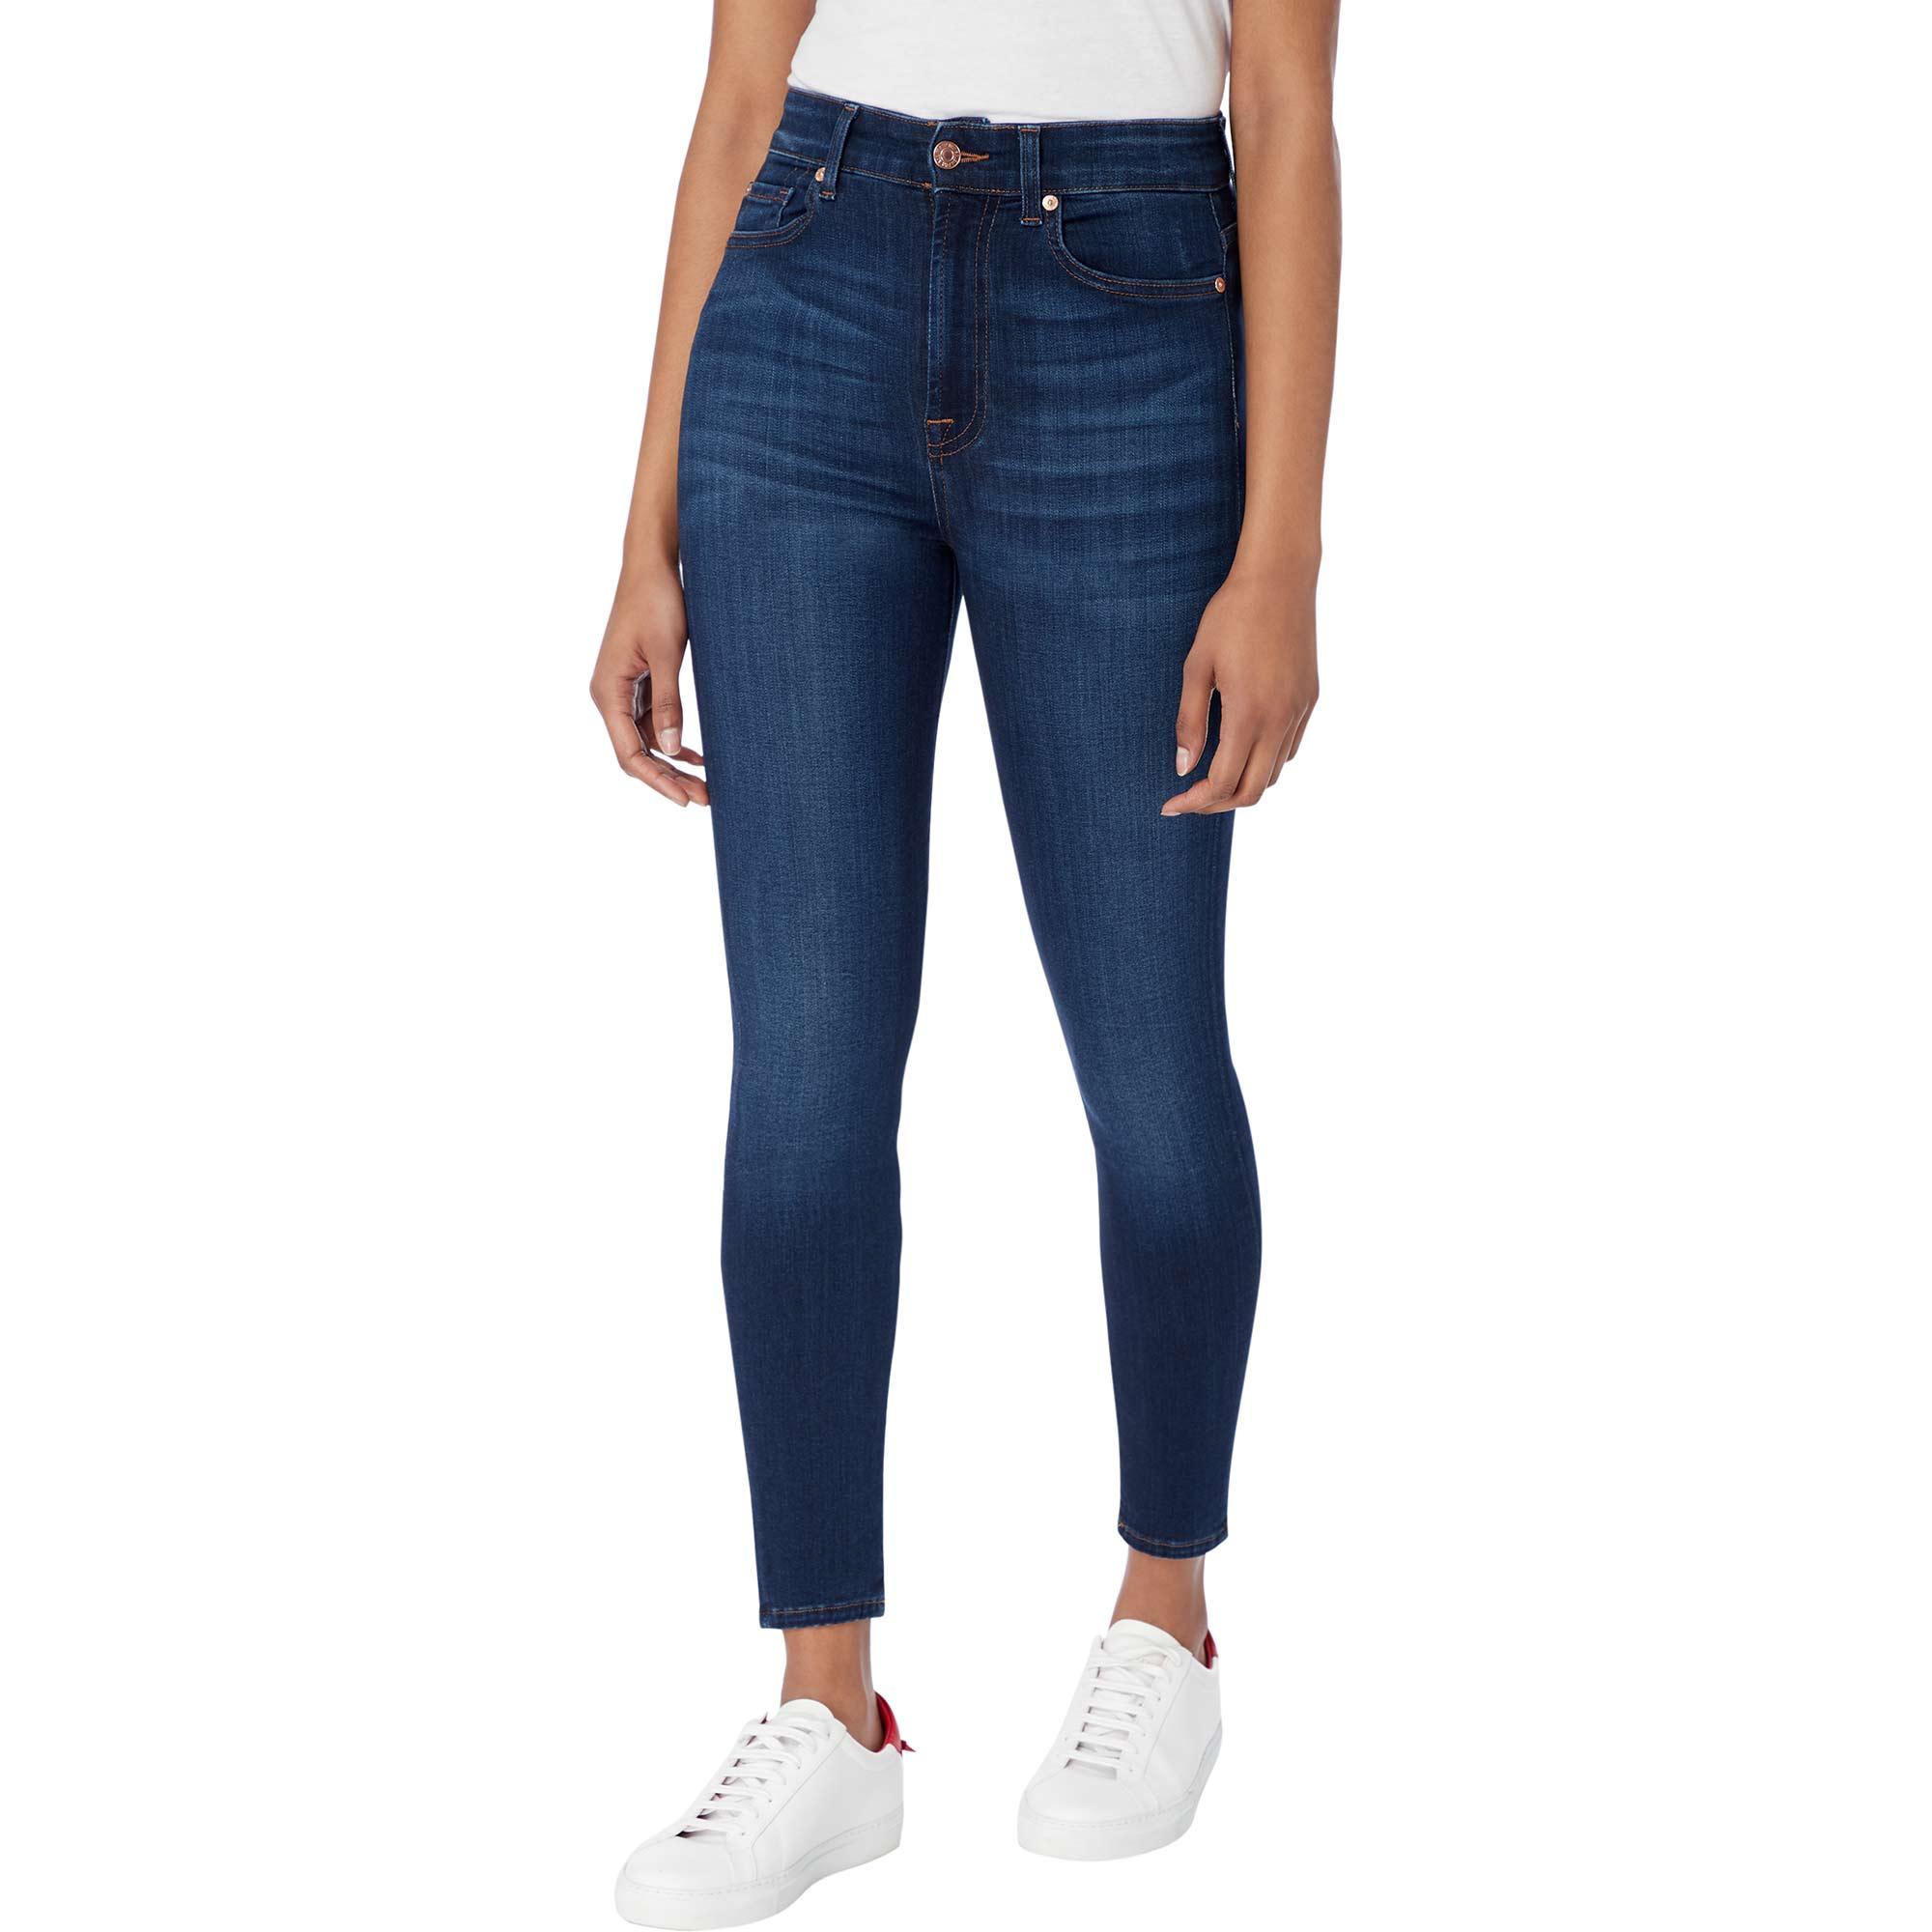 Aubrey High-Rise Slim Illusion Skinny Jeans